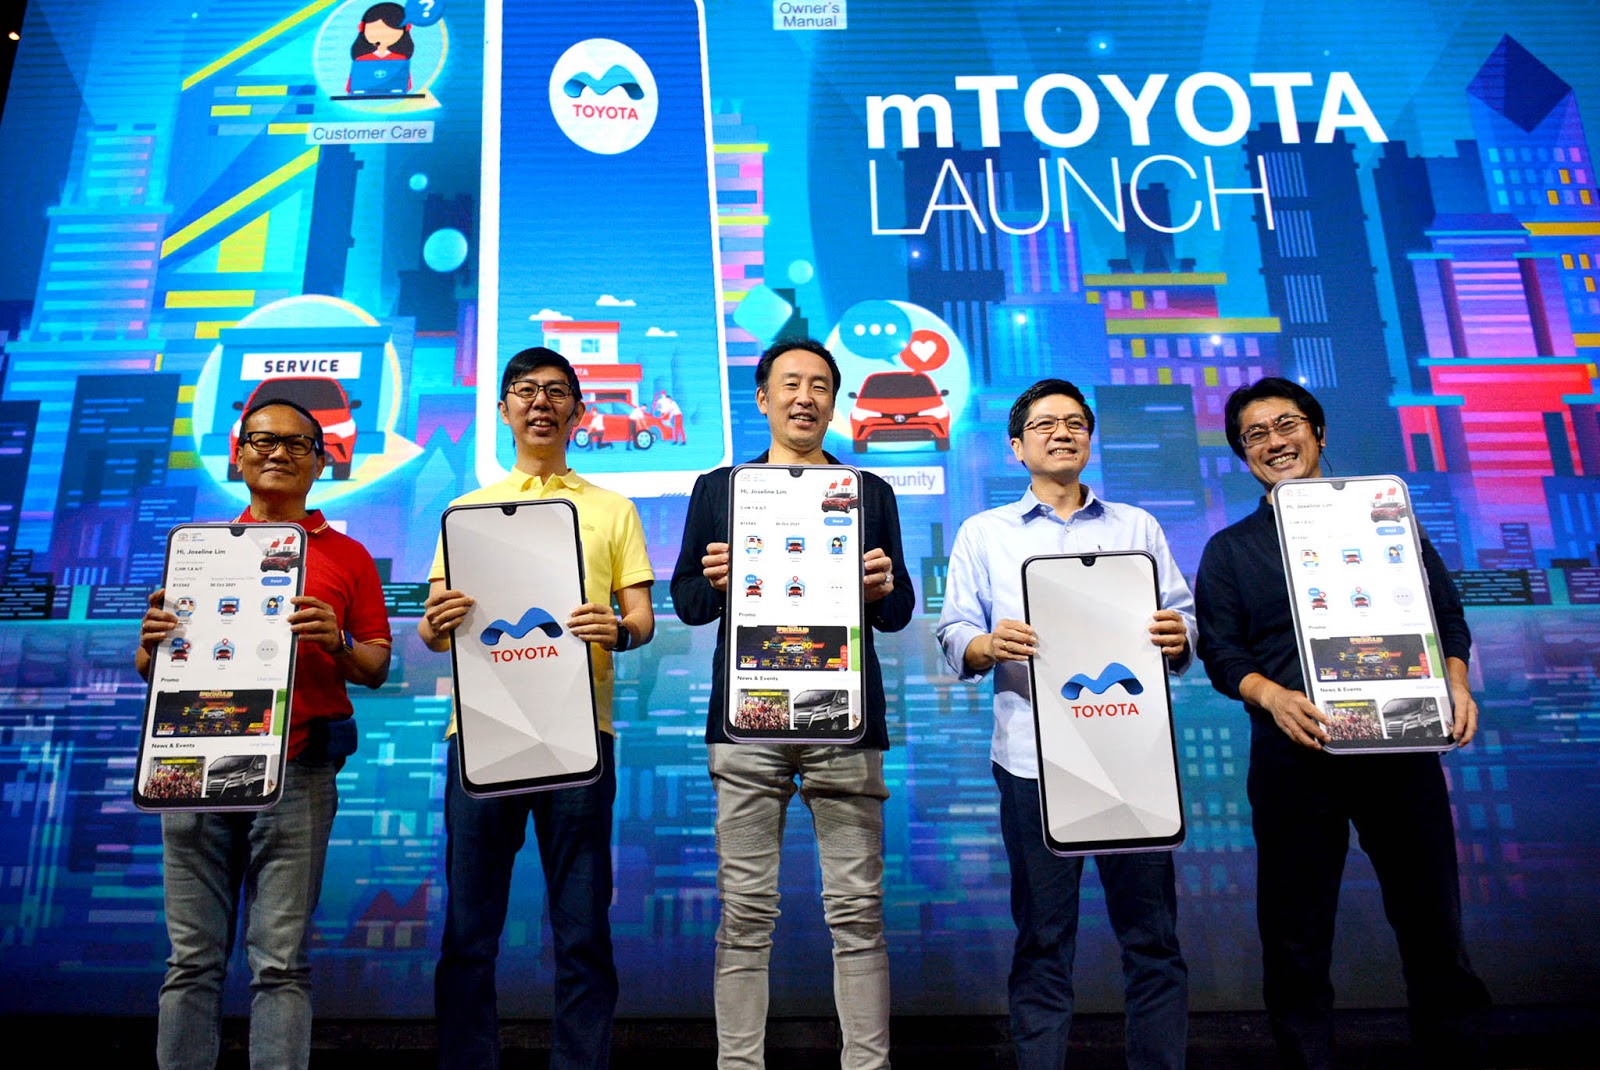 M Toyota Mempermudah Pengguna Toyota Melalui Aplikasi  